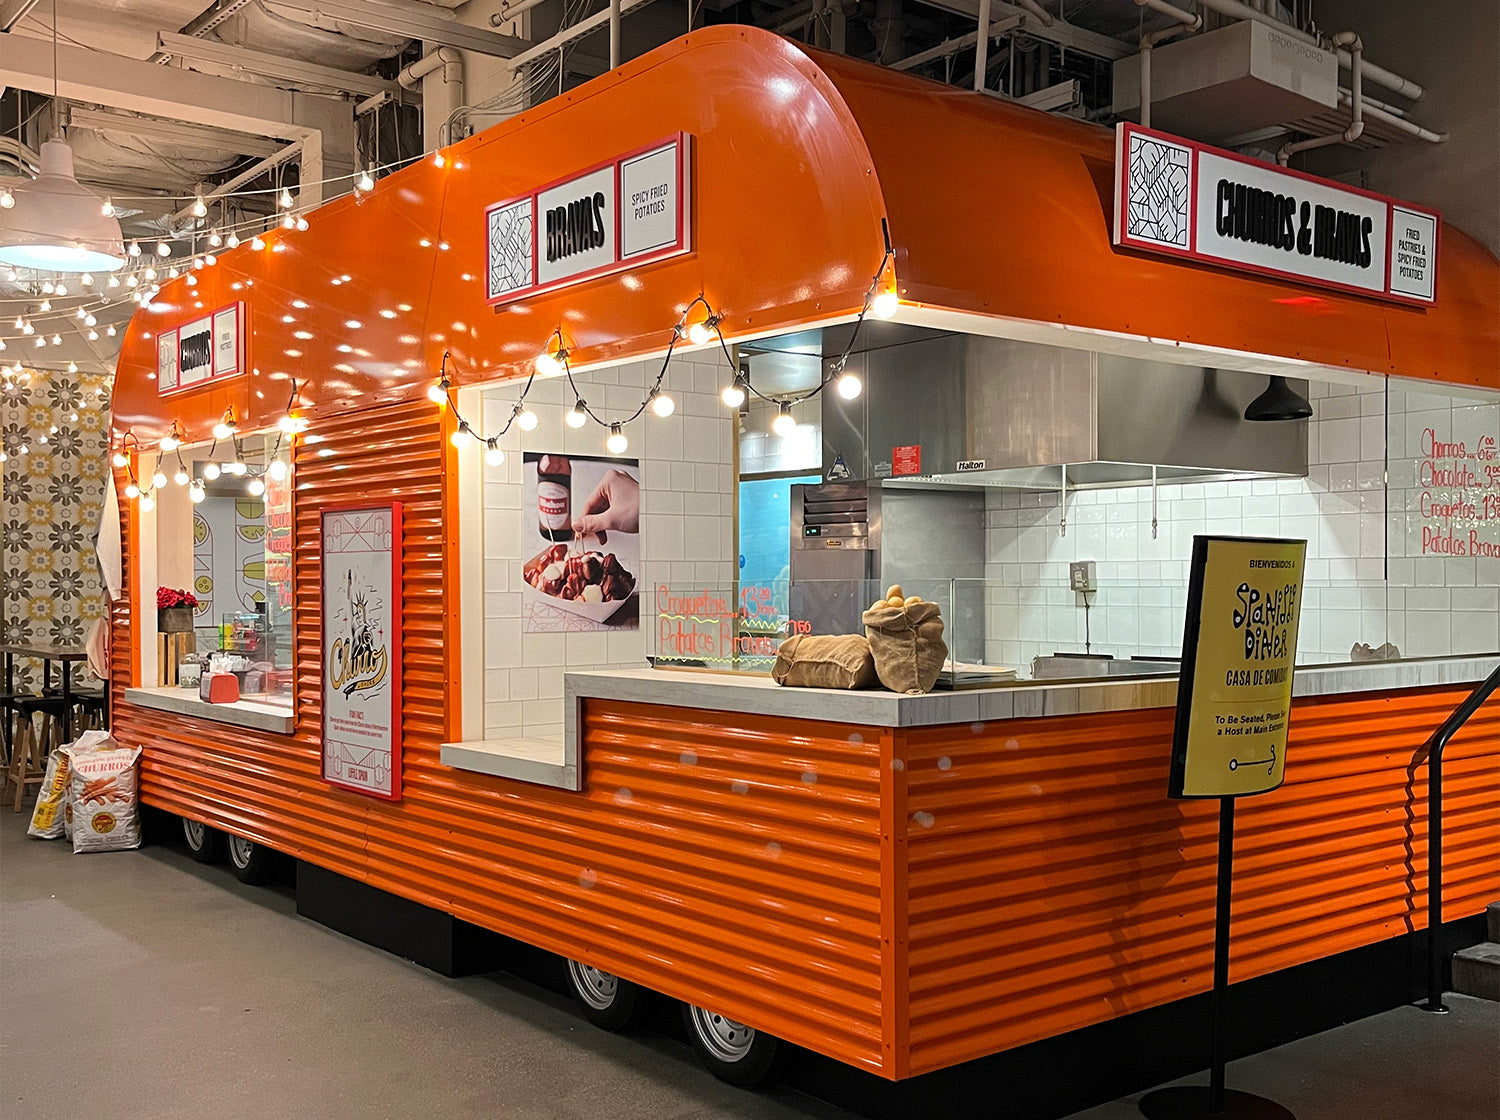 Shiney orange colored food truck that serves Spanish cuisine.